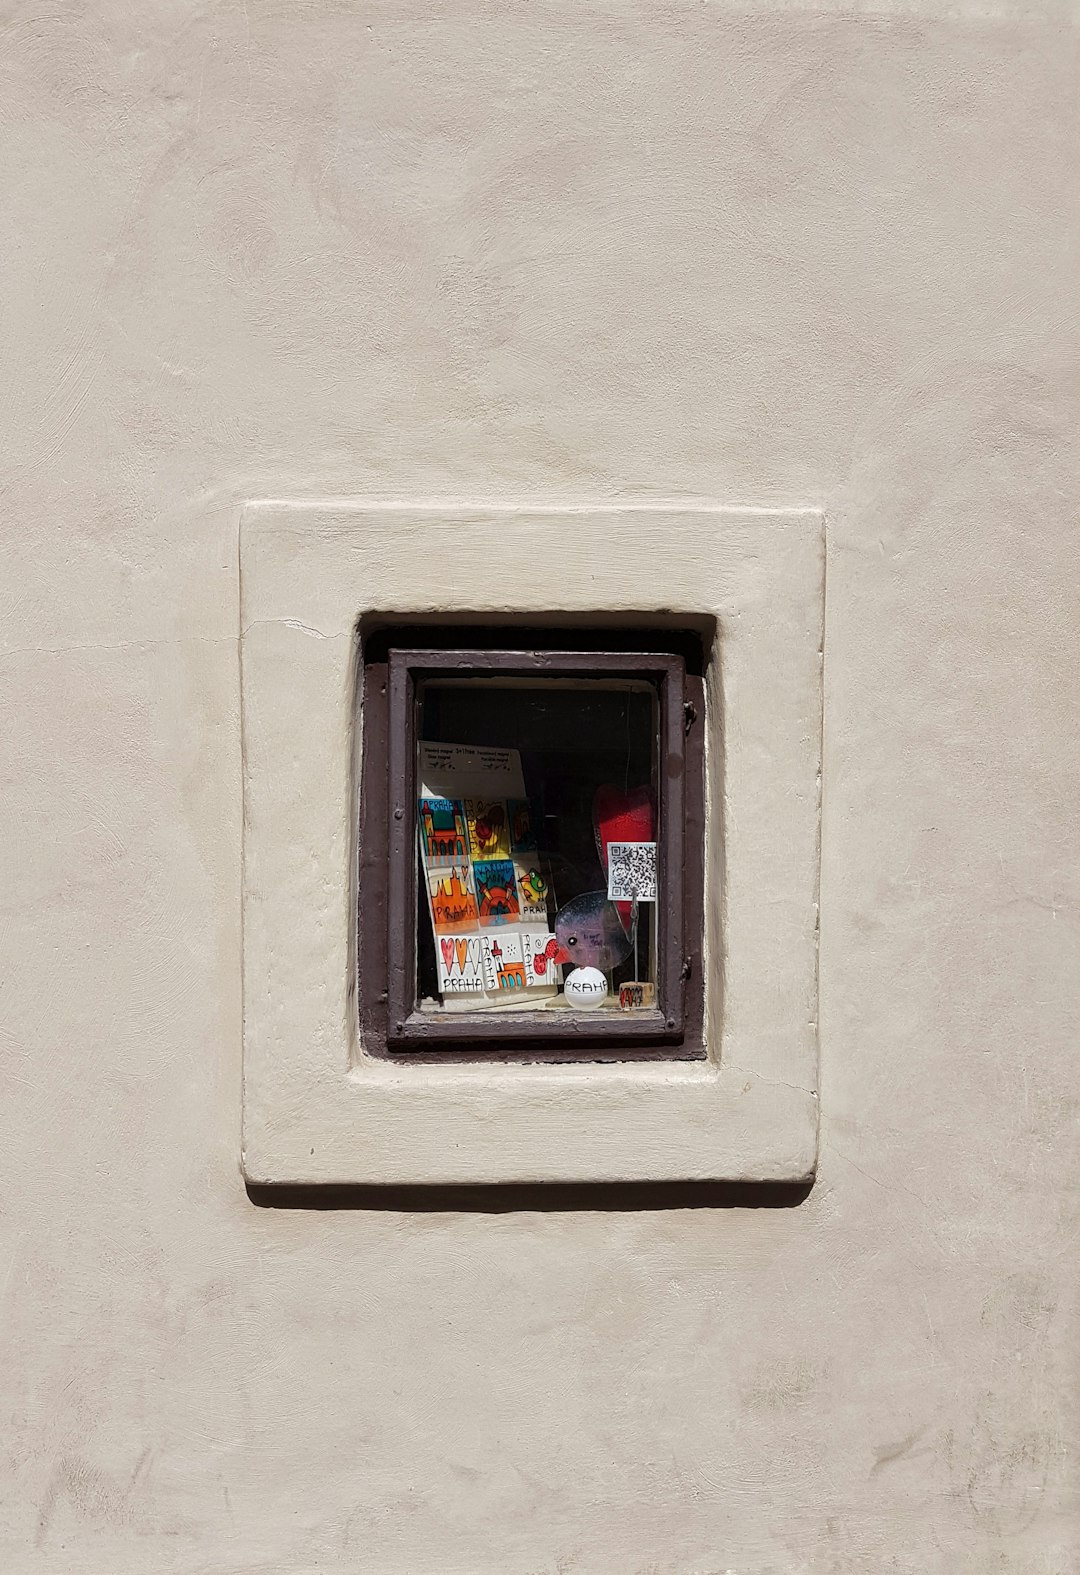 Small window